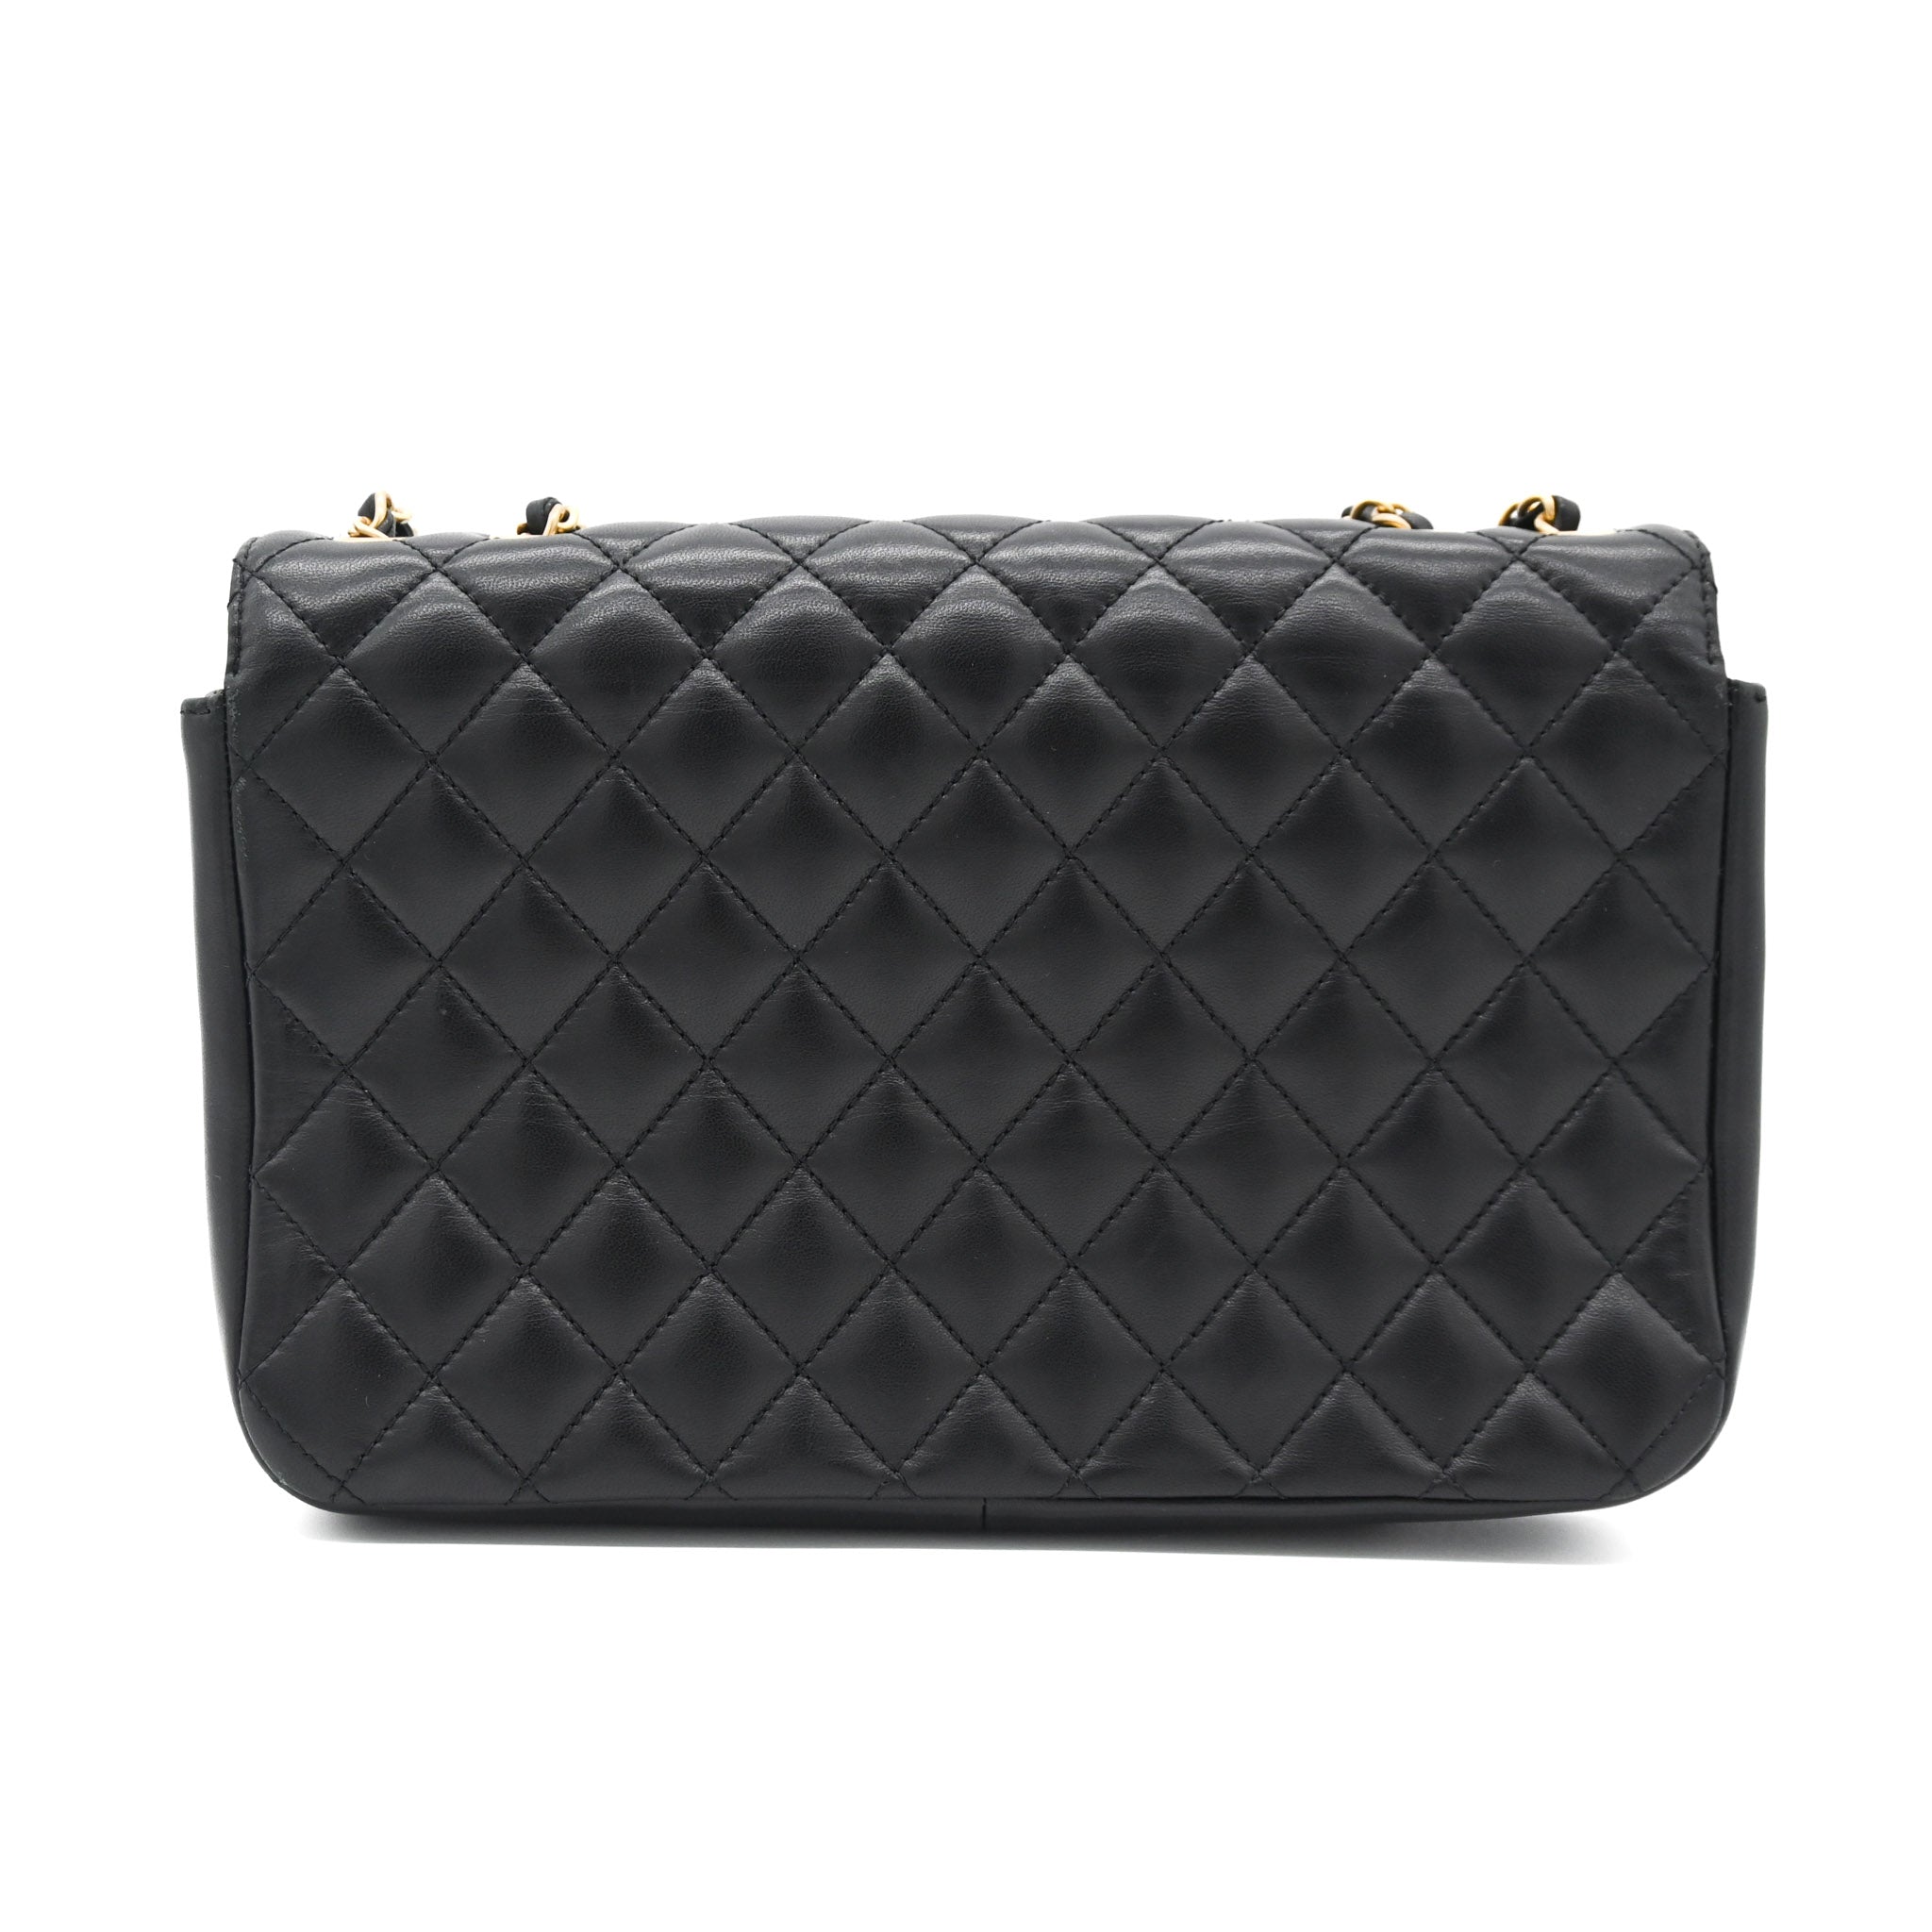 Chanel CC Chic Black Medium Double Flap Bag - Vault 55 | Authentic Preowned Luxury